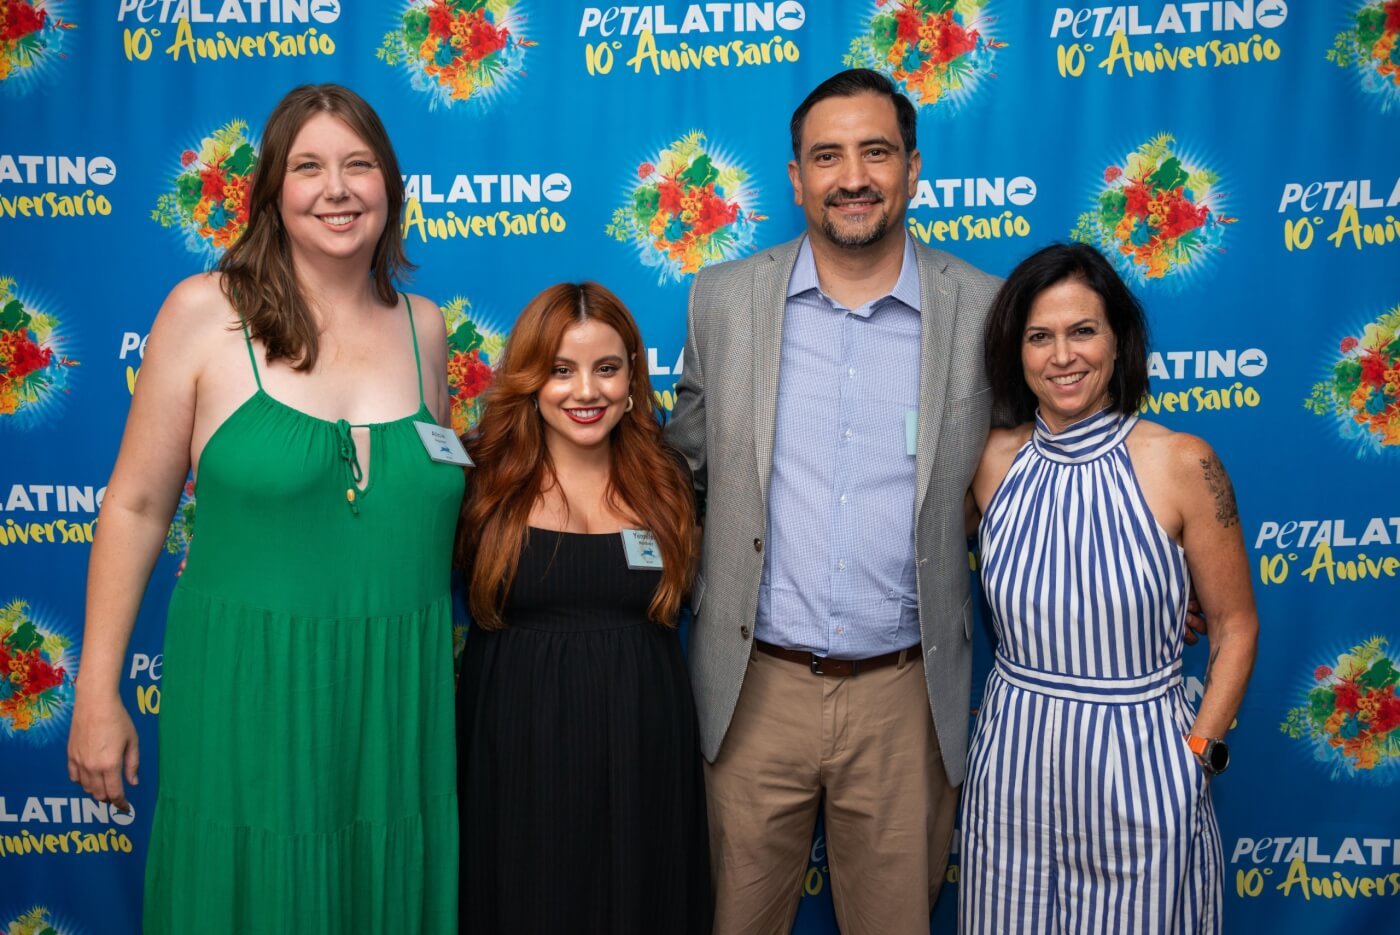 Alicia Aguayo, Yennifer Martinez, Gabriel Ochoa, and Lisa Lange in front of PETA Latino's tenth anniversary banner